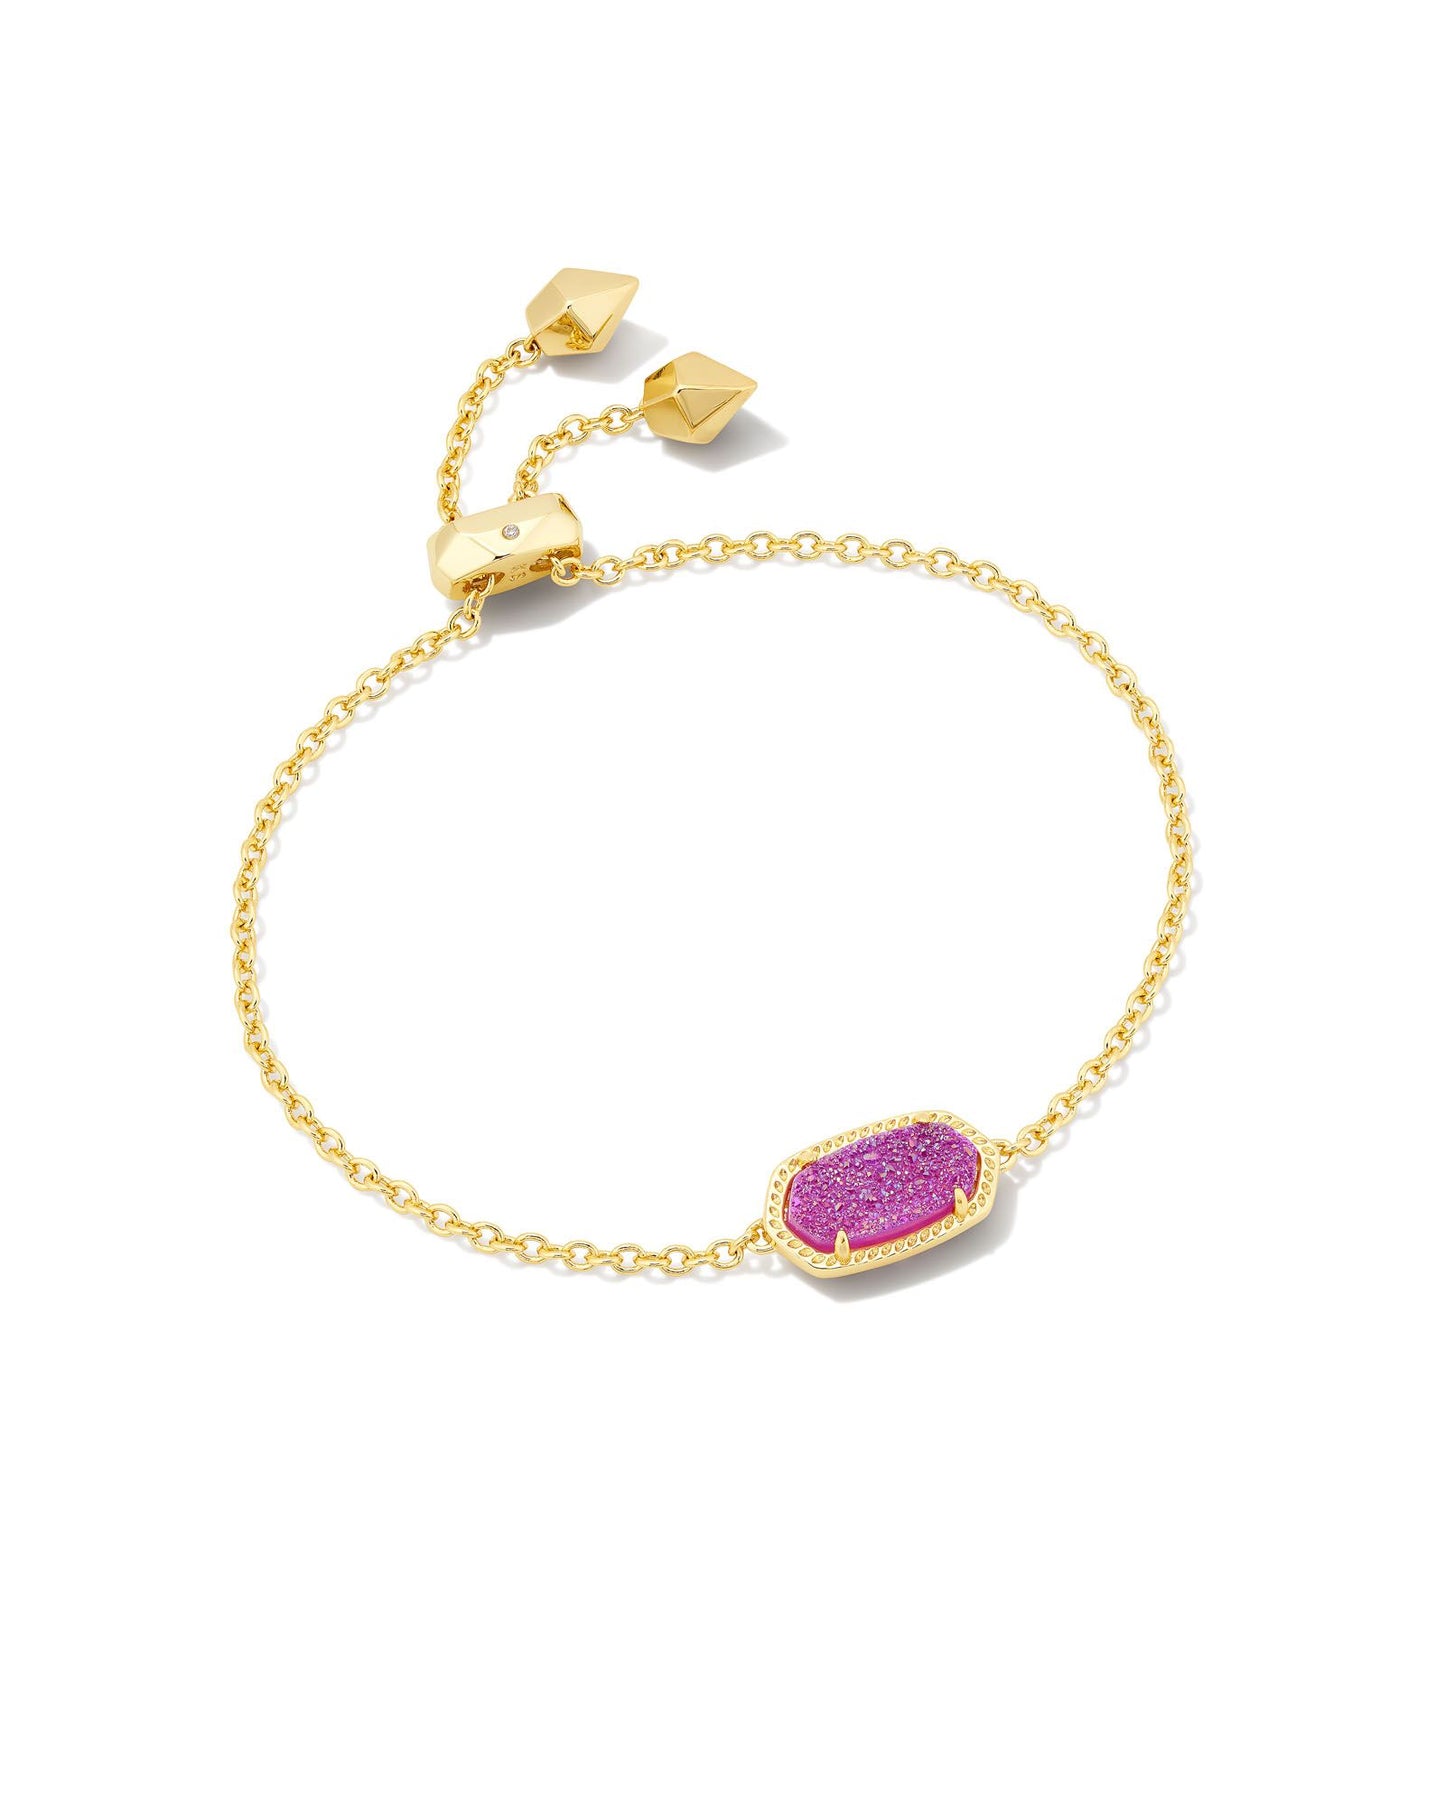 Kendra Scott Elaina Delicate Chain Bracelet  - Gold Mulberry Drusy